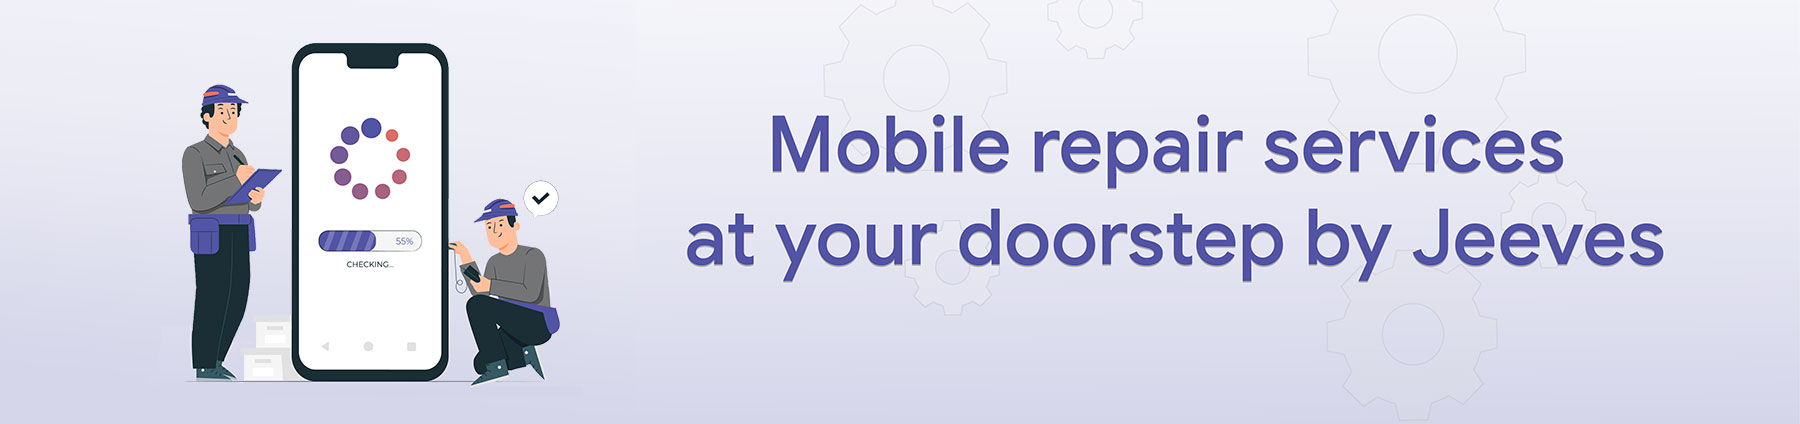 Mobile repair Servics at your doorstep by jeeves